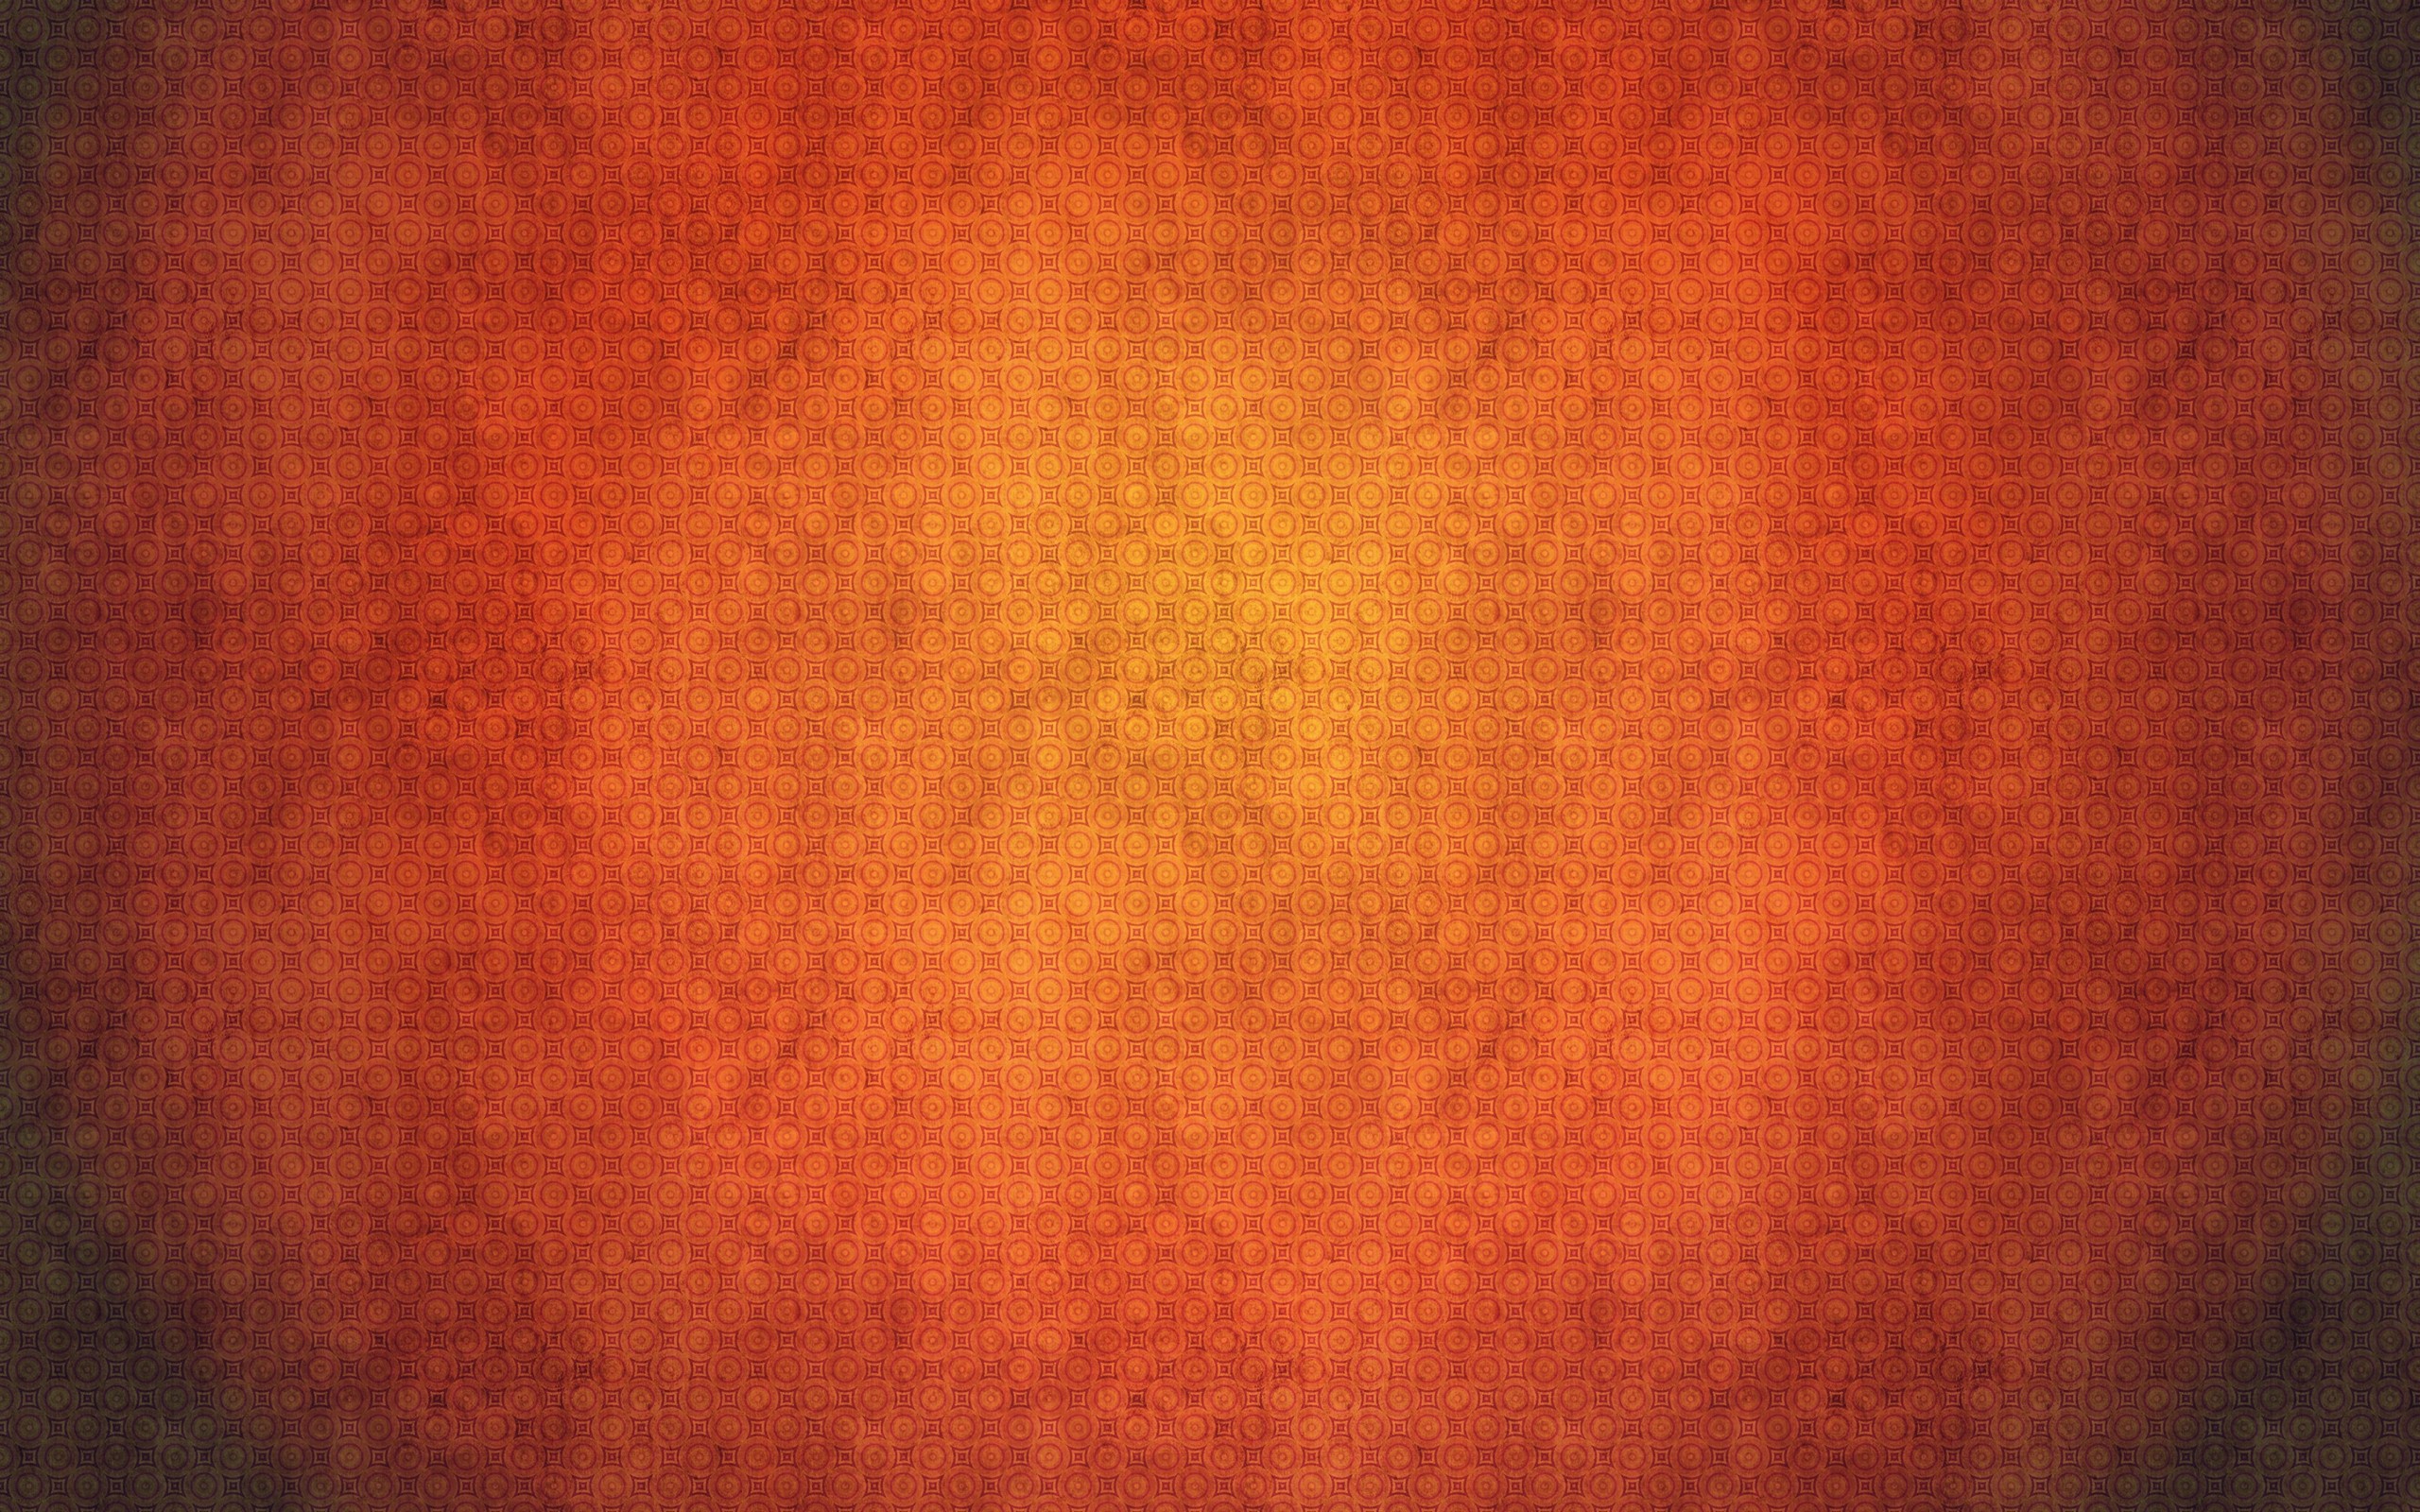 Wallpapers minimalistic orange patterns on the desktop